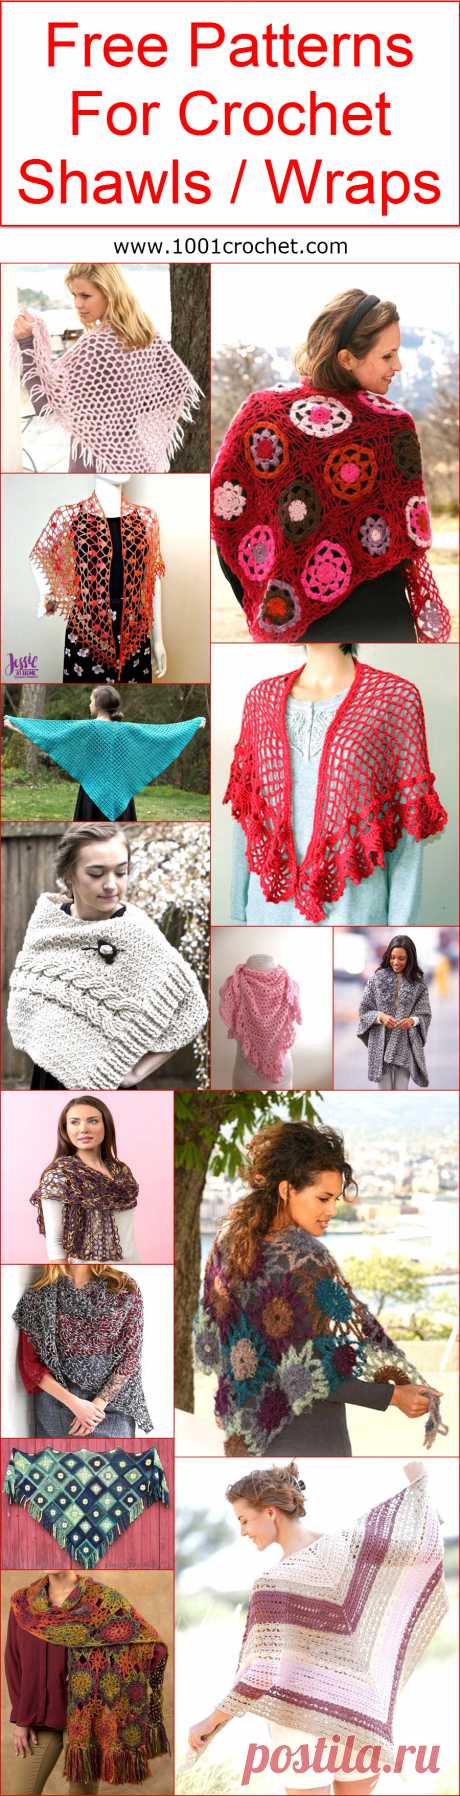 Free Patterns For Crochet Shawls / Wraps | 1001 Crochet